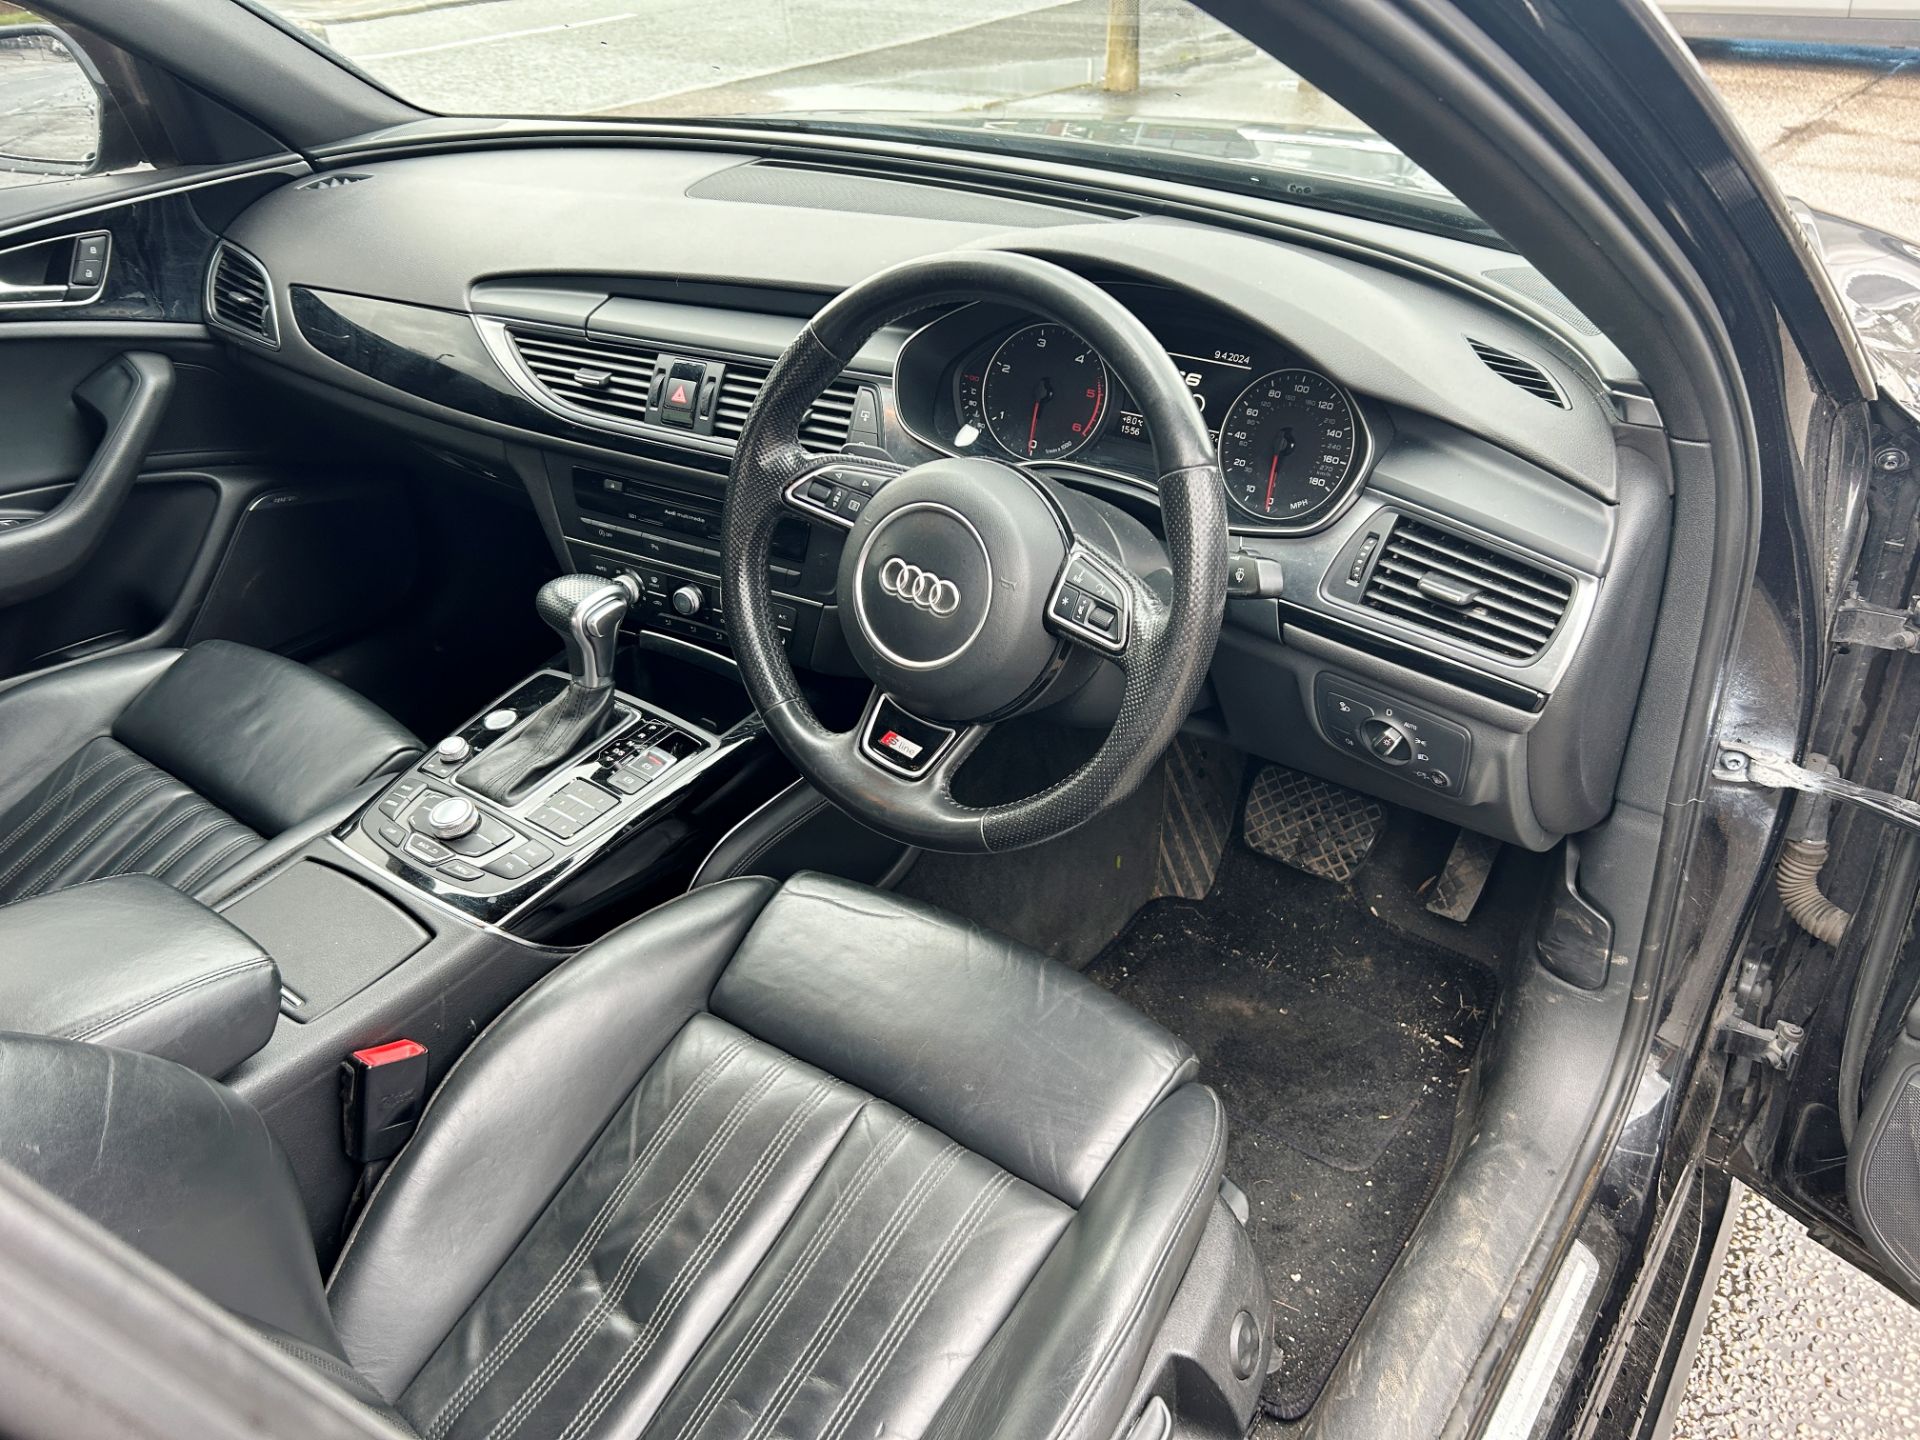 Audi A6 S Line Black Edition TDI Ultr | MD14 ABF | 106,625 miles, Cracked Window, ZERO VAT ON HAMMER - Image 16 of 24